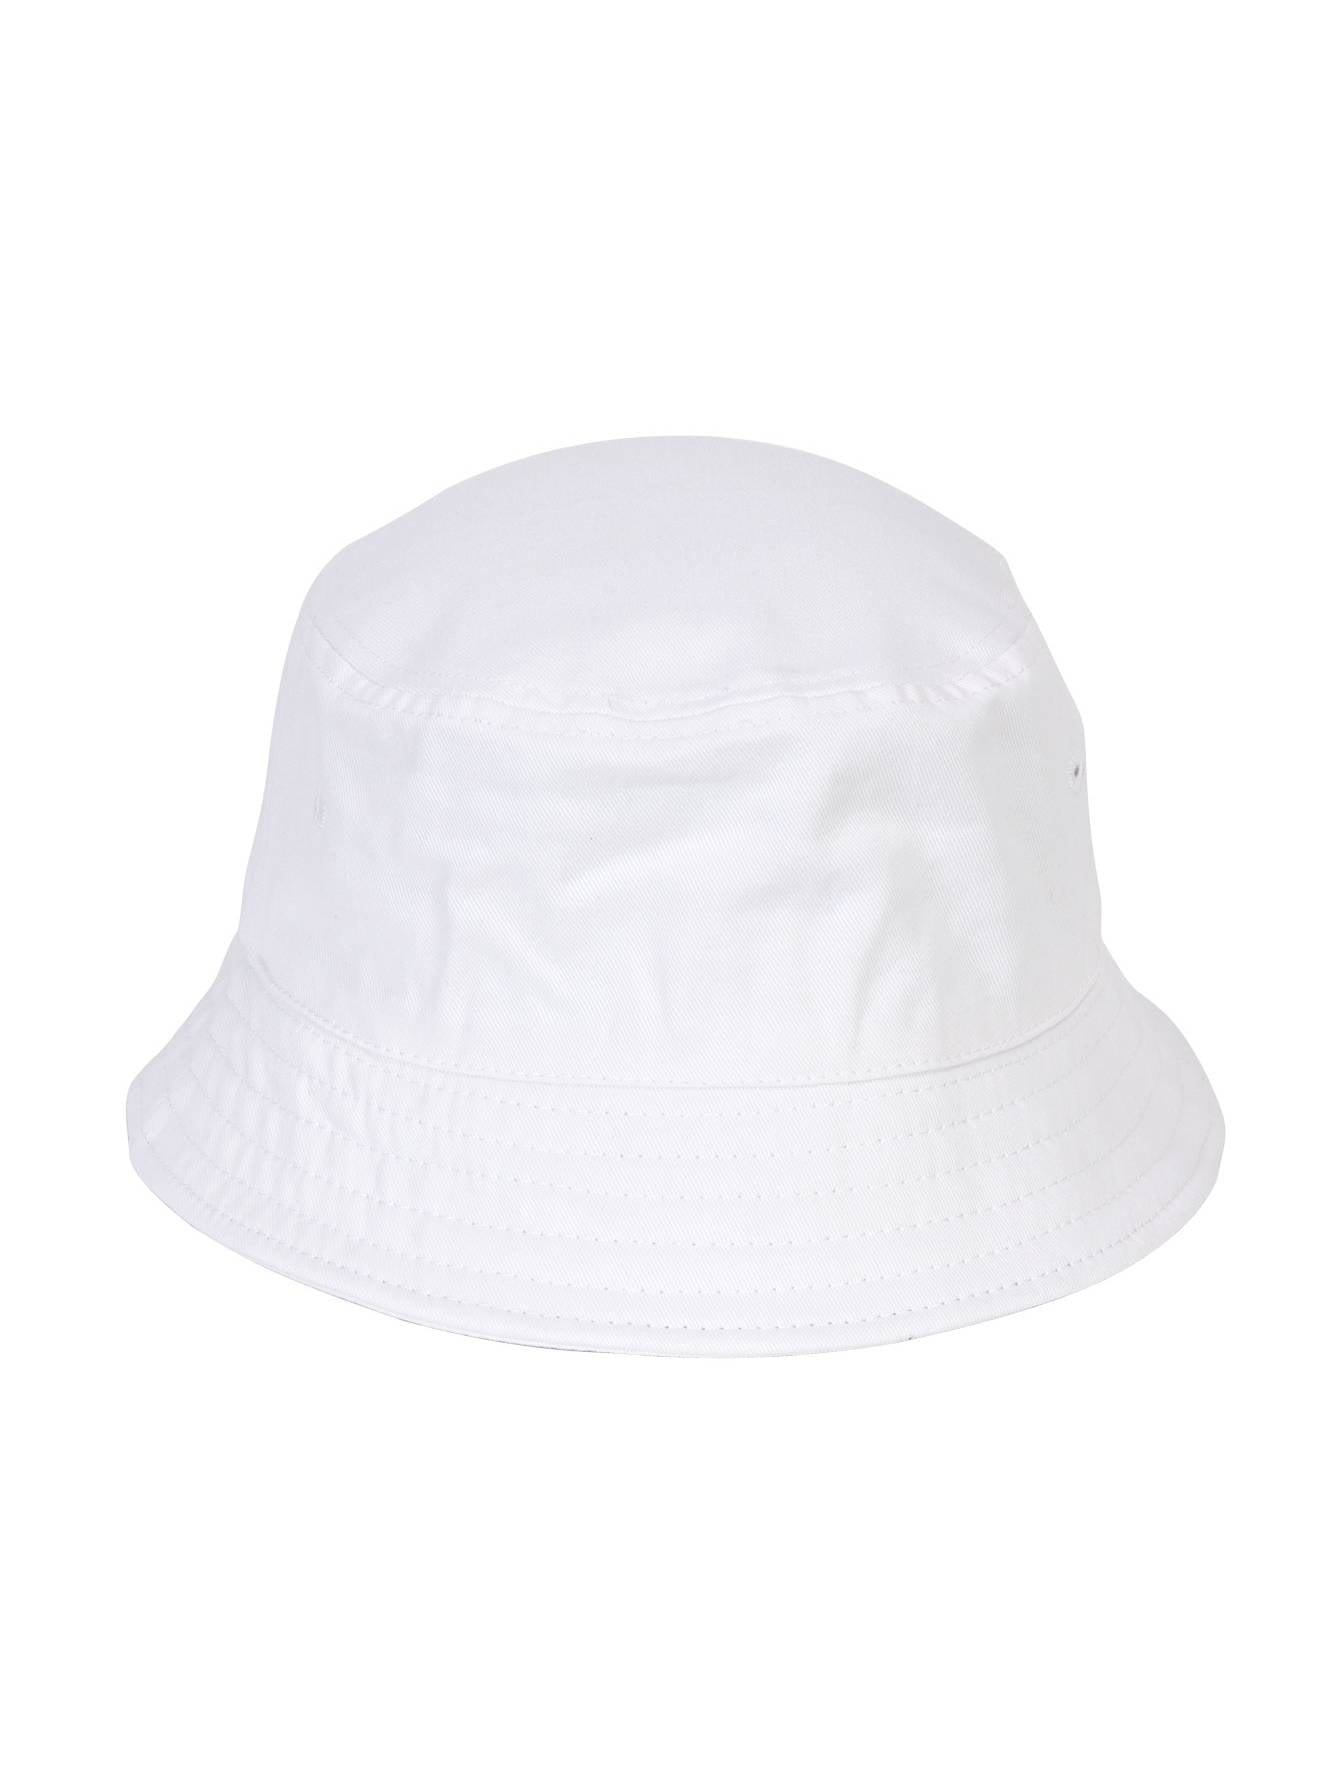 TopHeadwear Blank Outdoor Bucket Hat - Walmart.com